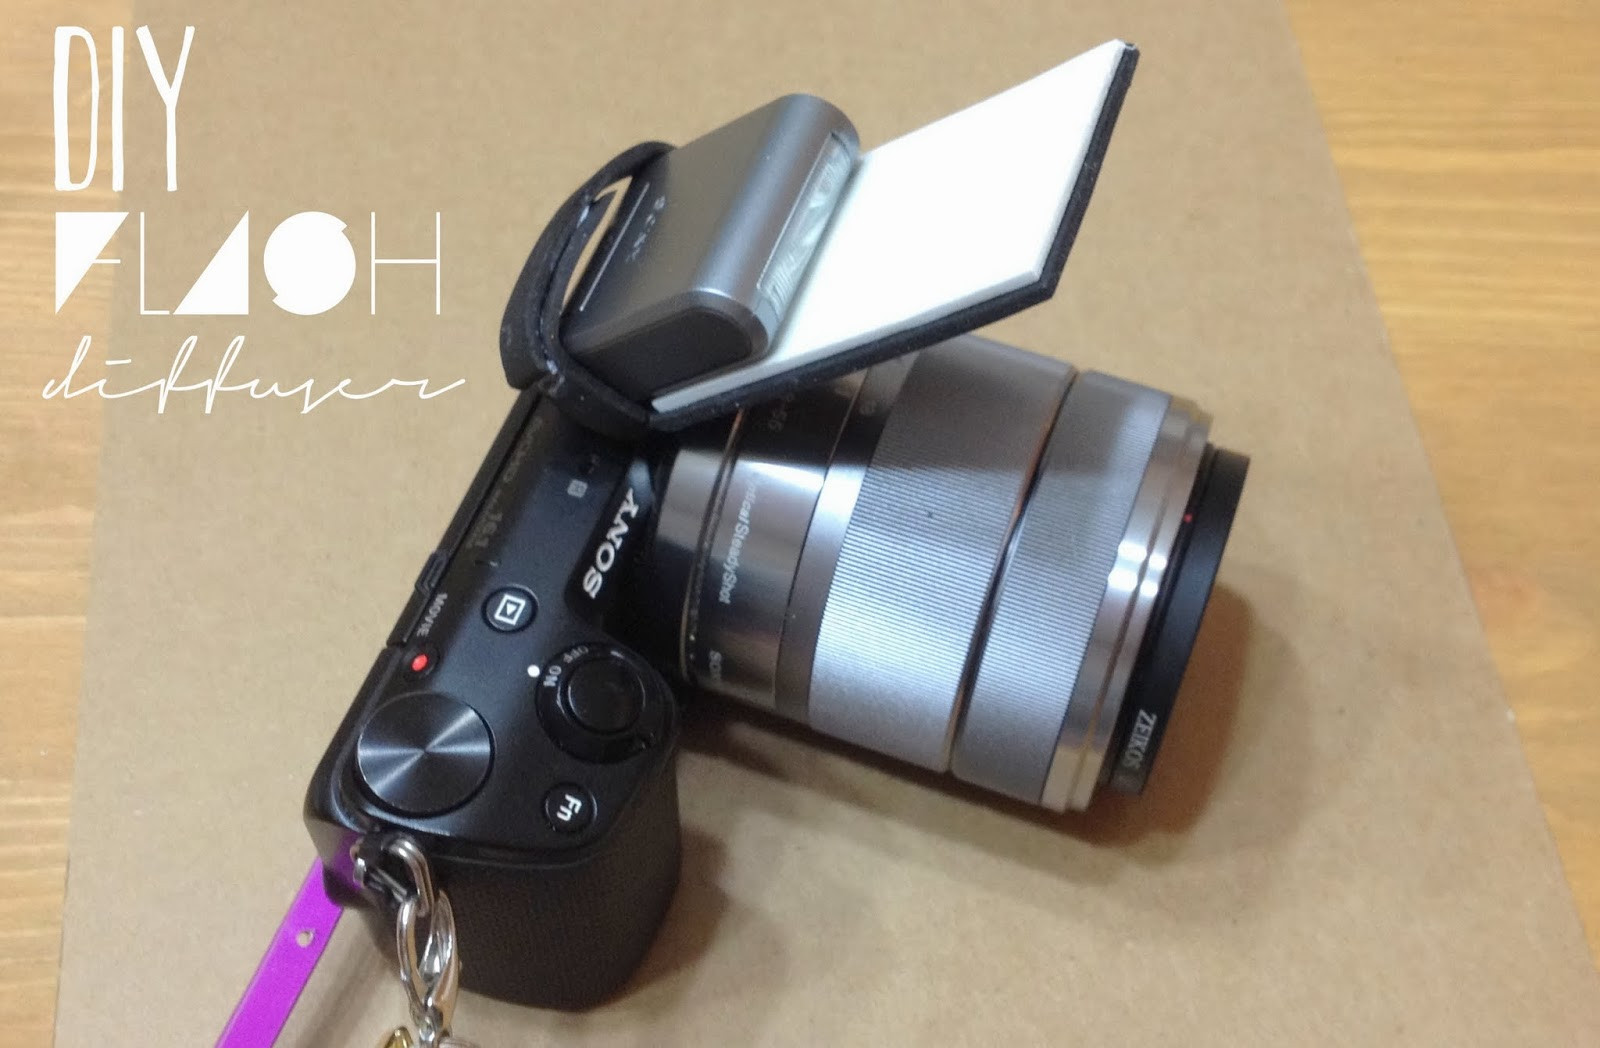 Best ideas about DIY Flash Diffusor
. Save or Pin DIY Flash Diffuser Sony NEX 5 Now.